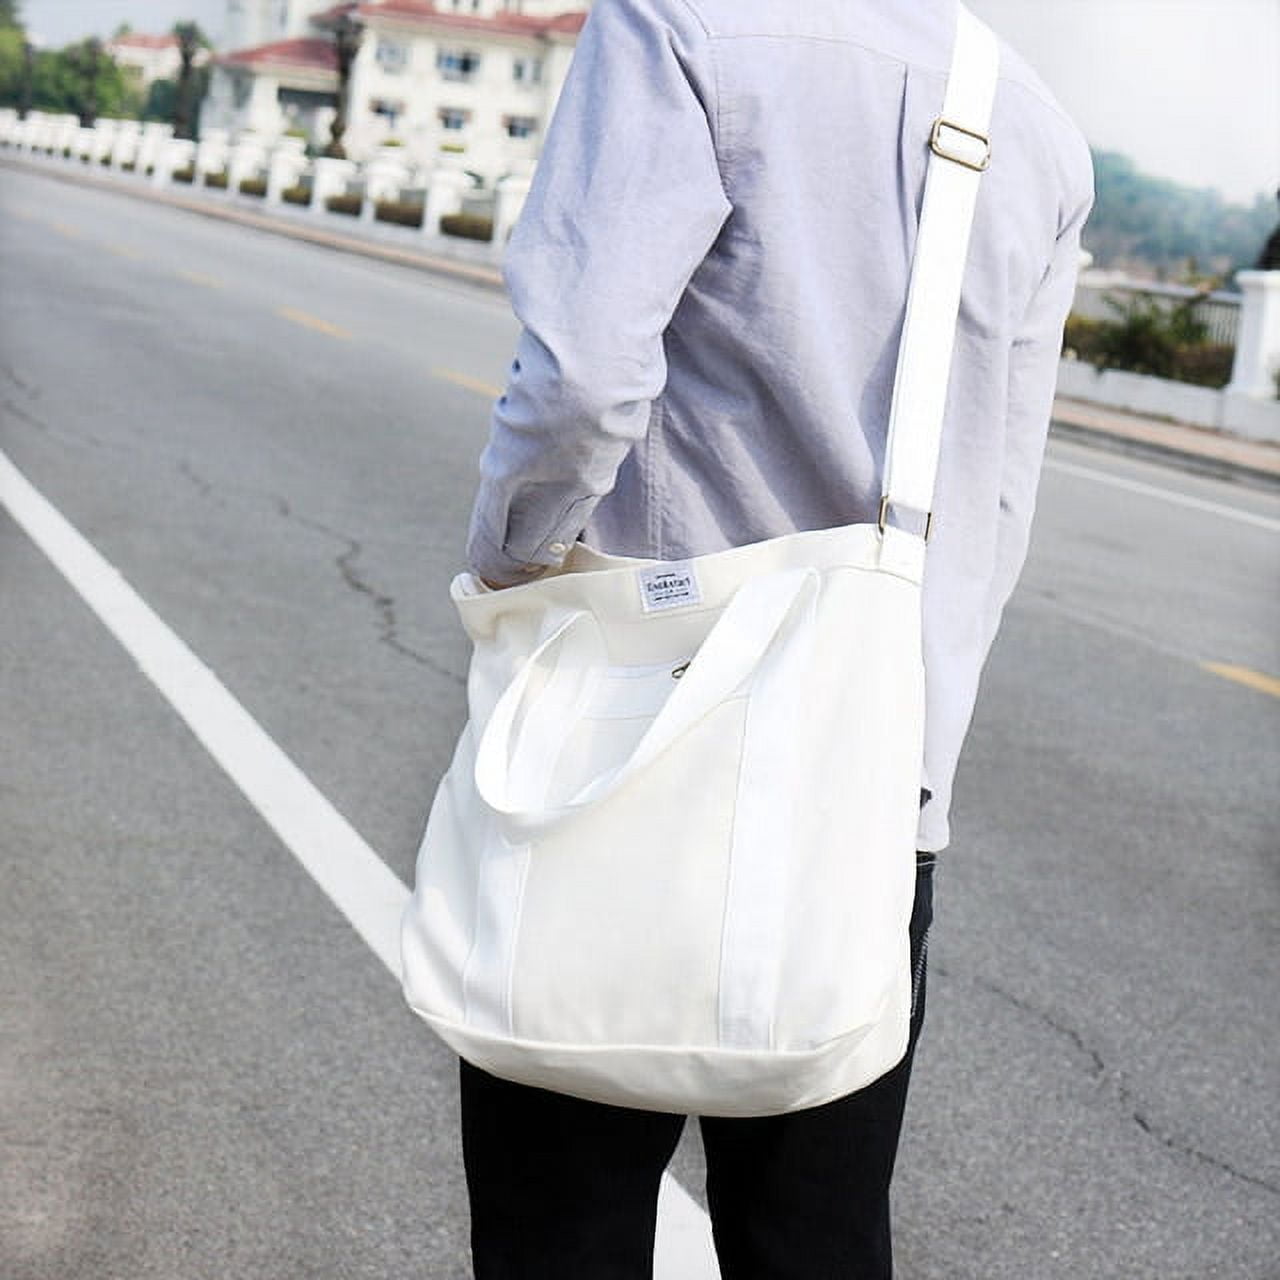 Mens Bag Messenger Bag Canvas Shoulder Bags Travel Bag Man Purse Crossbody  | eBay